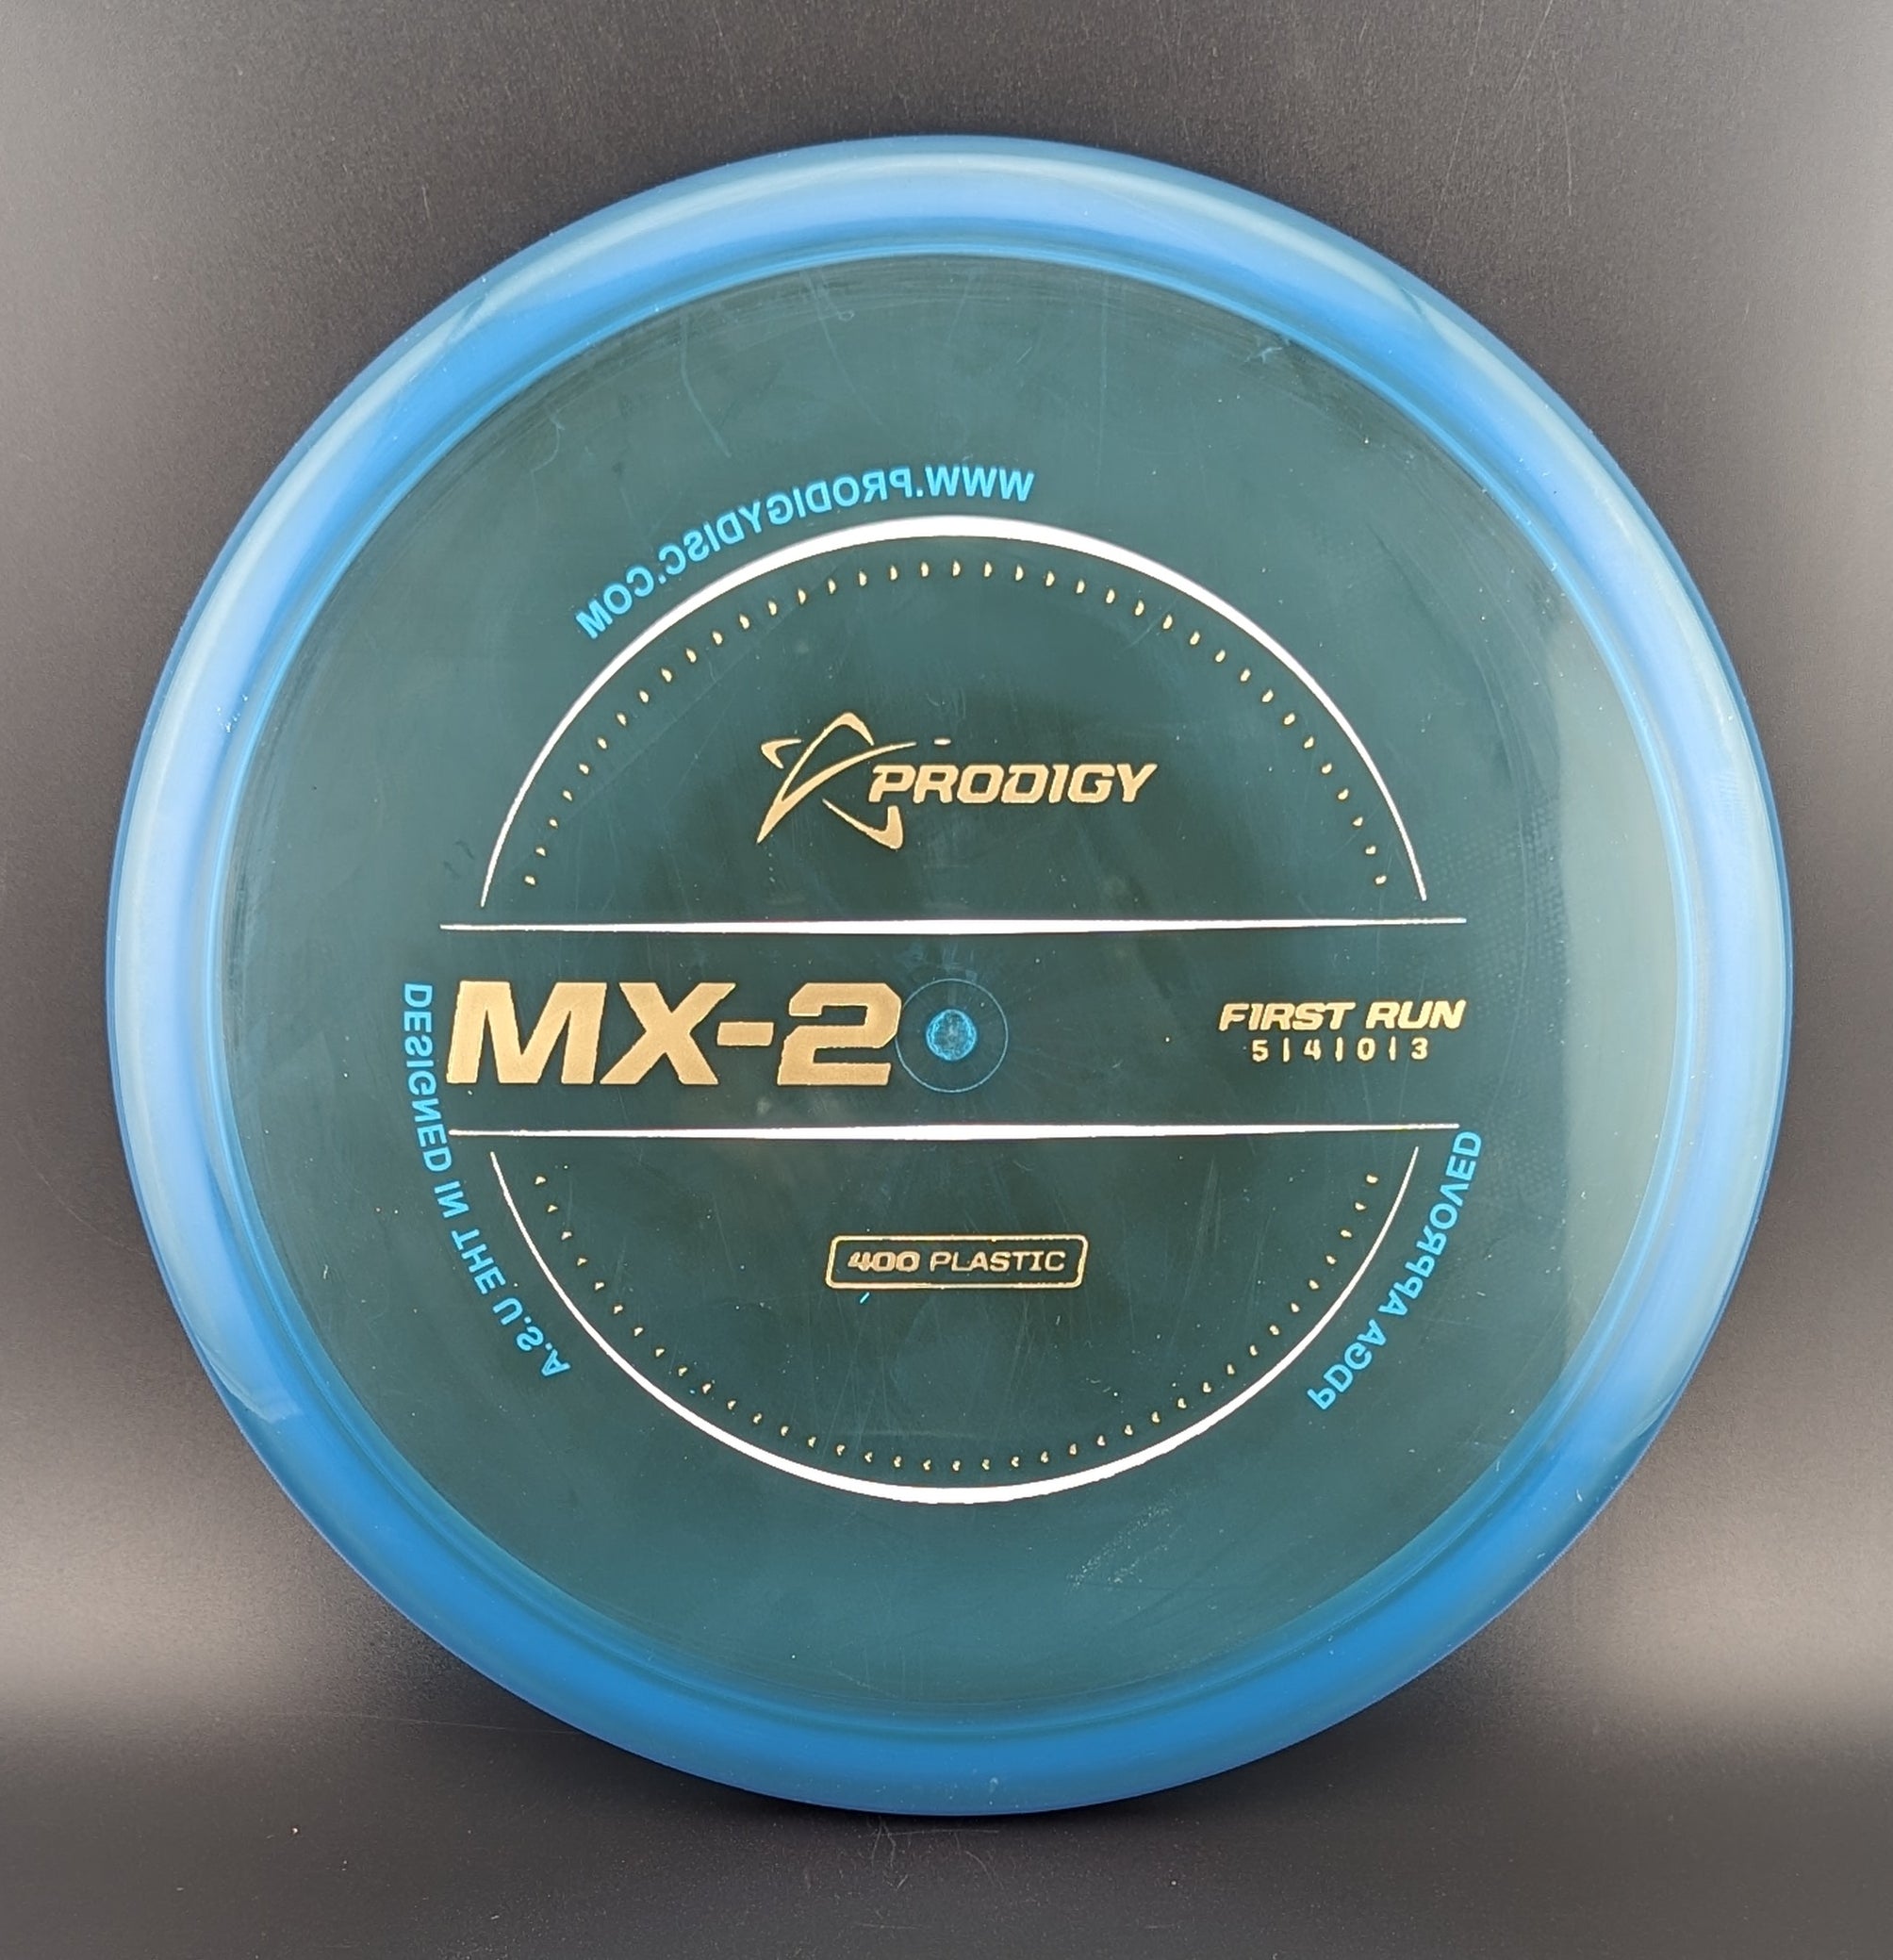 Prodigy 400 MX-2 FIRST RUN